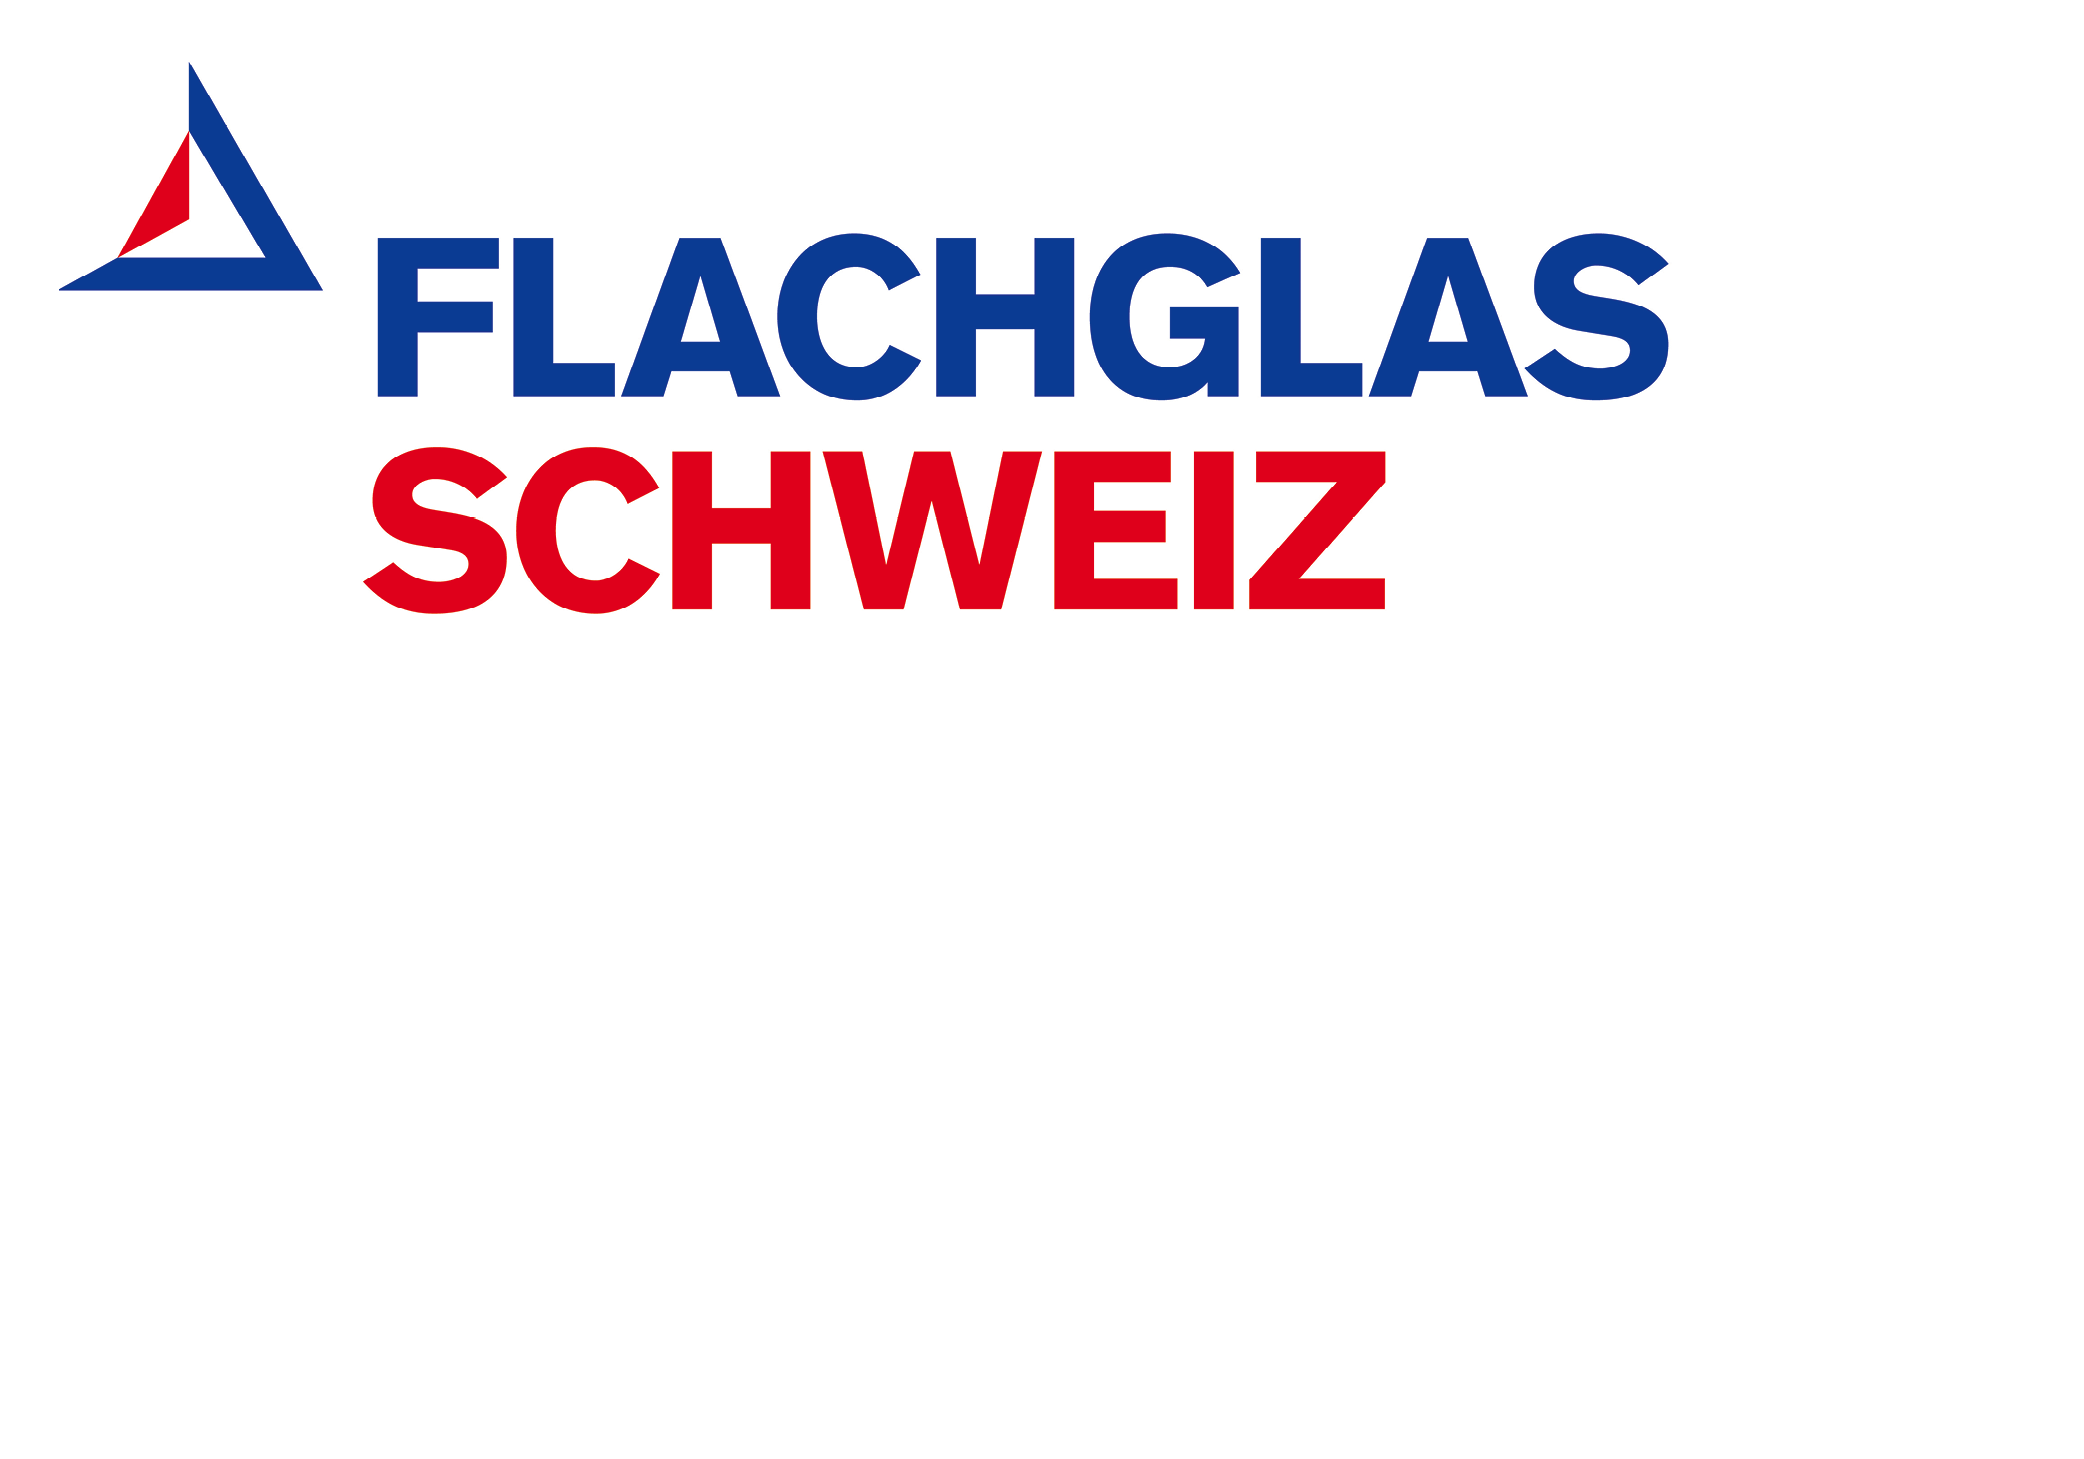 flachglas schweiz